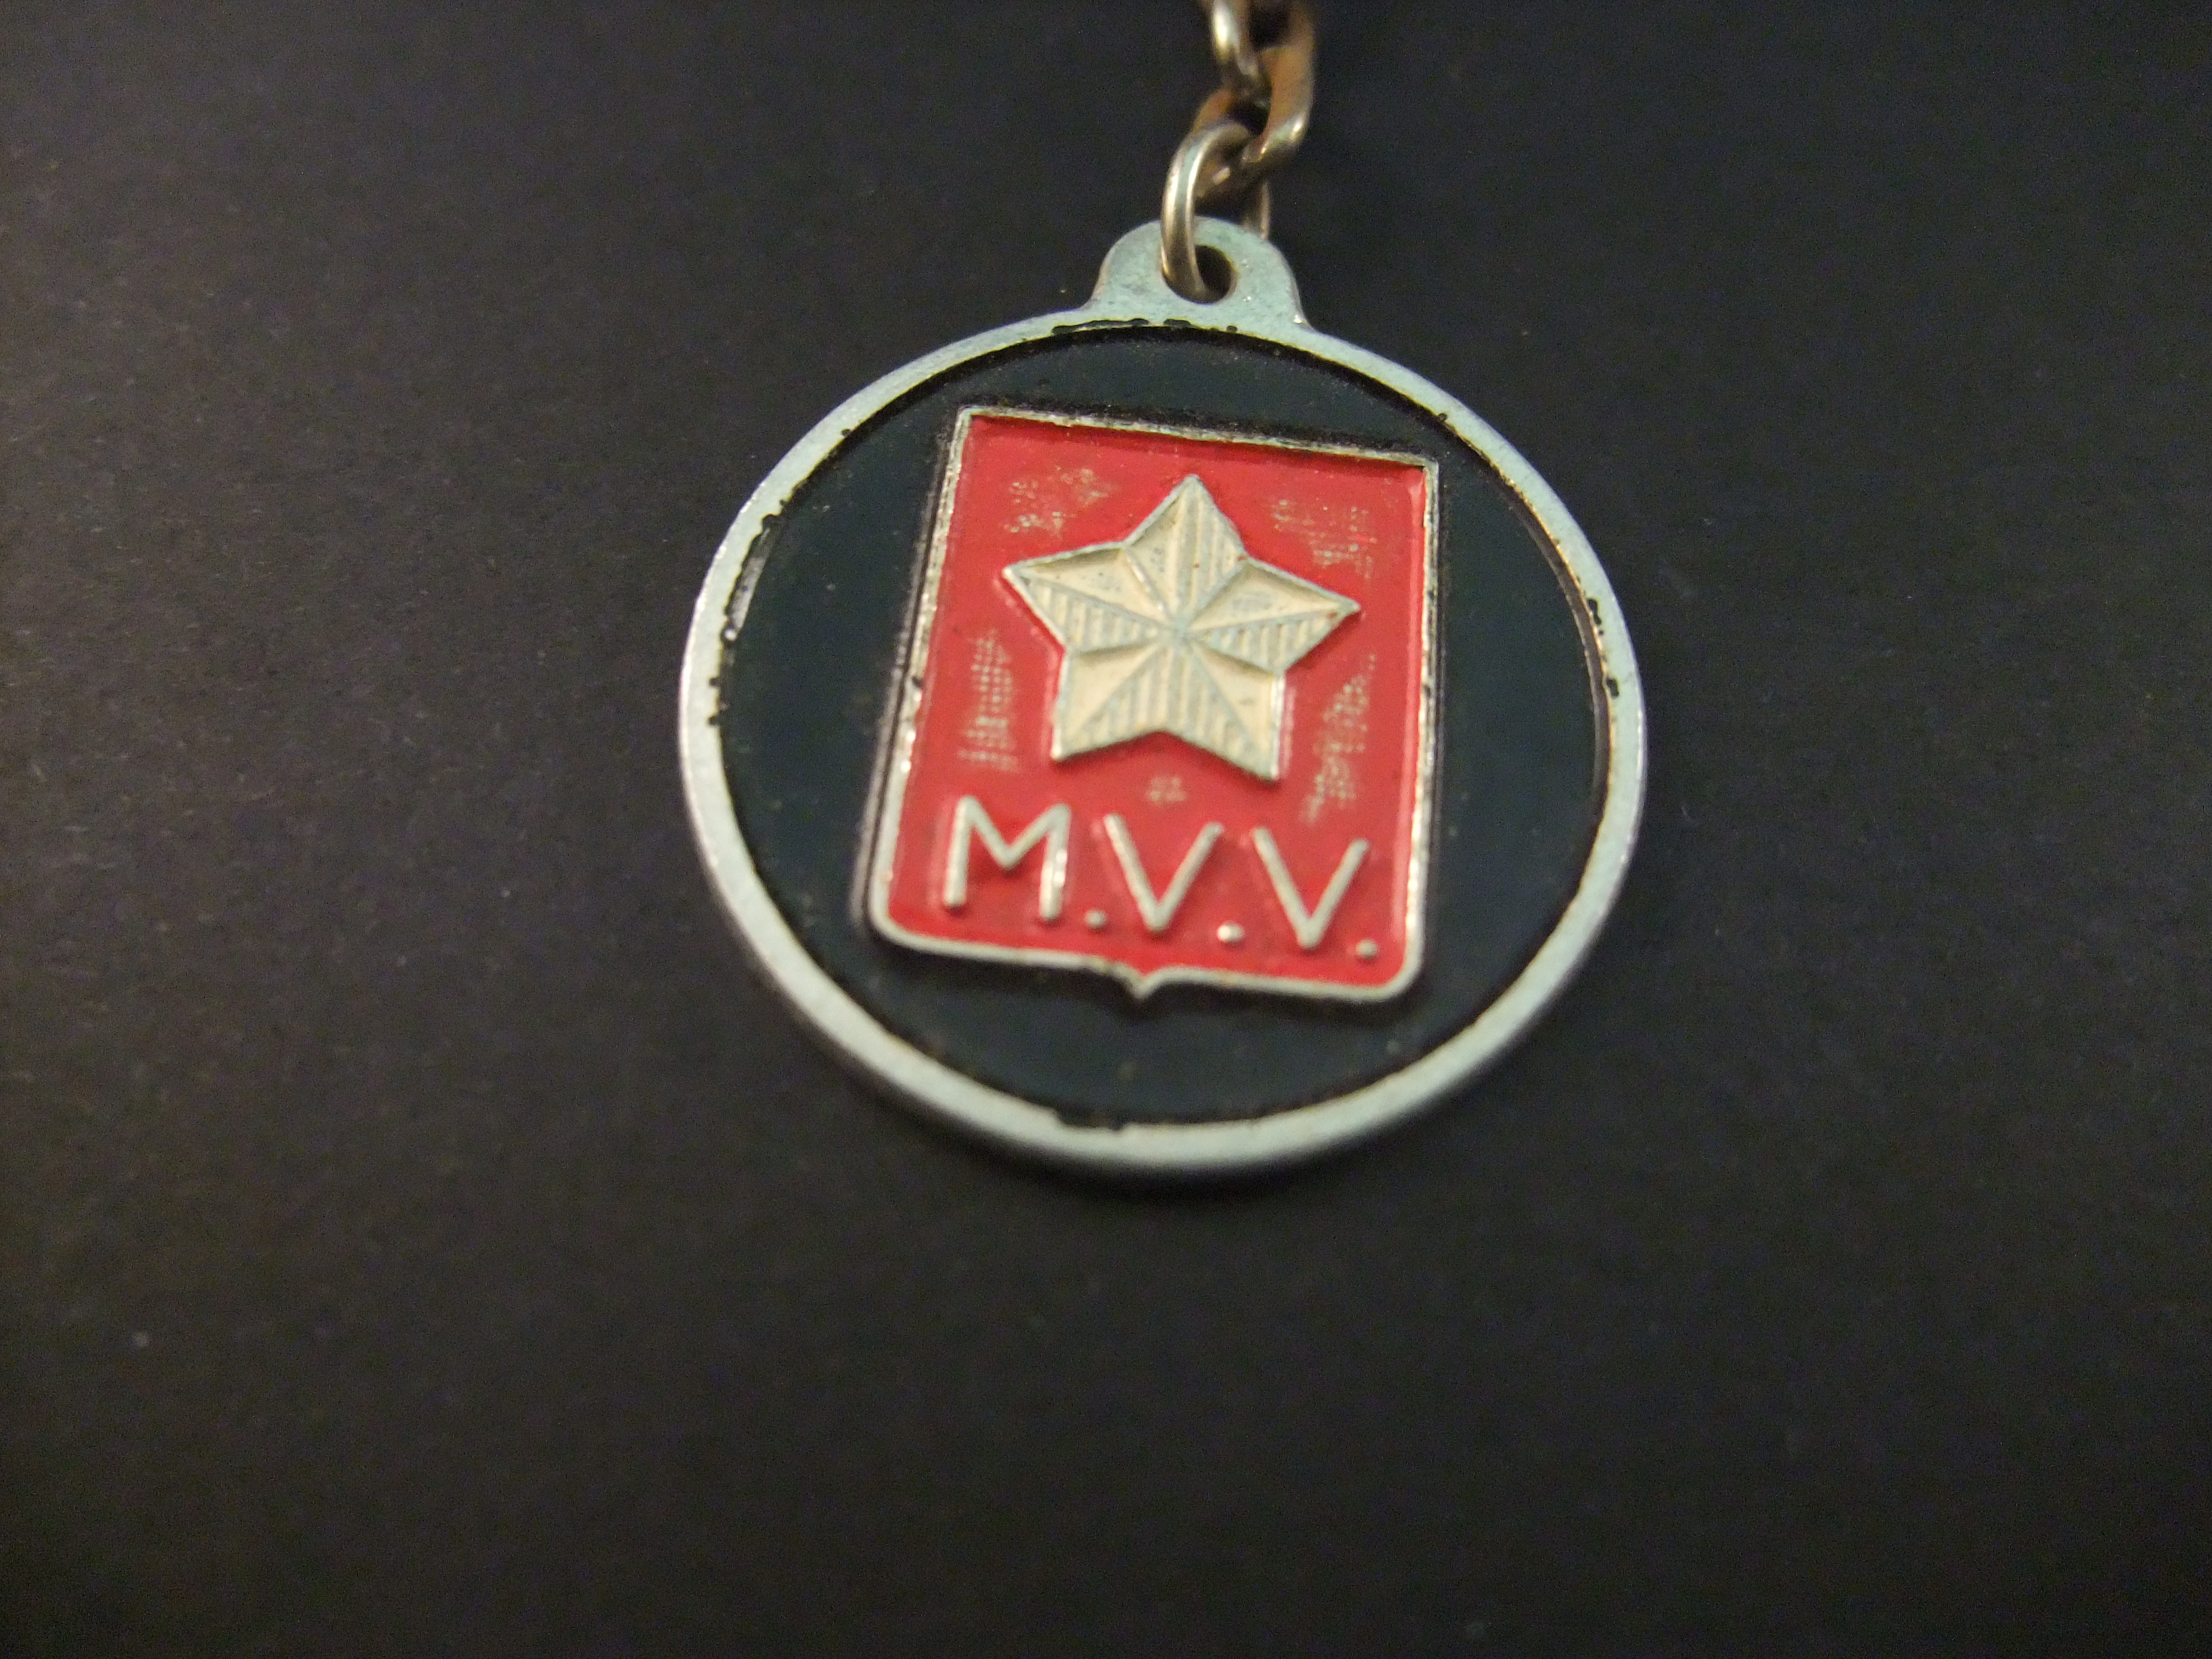 MVV voetbalclub Maastricht (Limburg)oude sleutelhanger logo